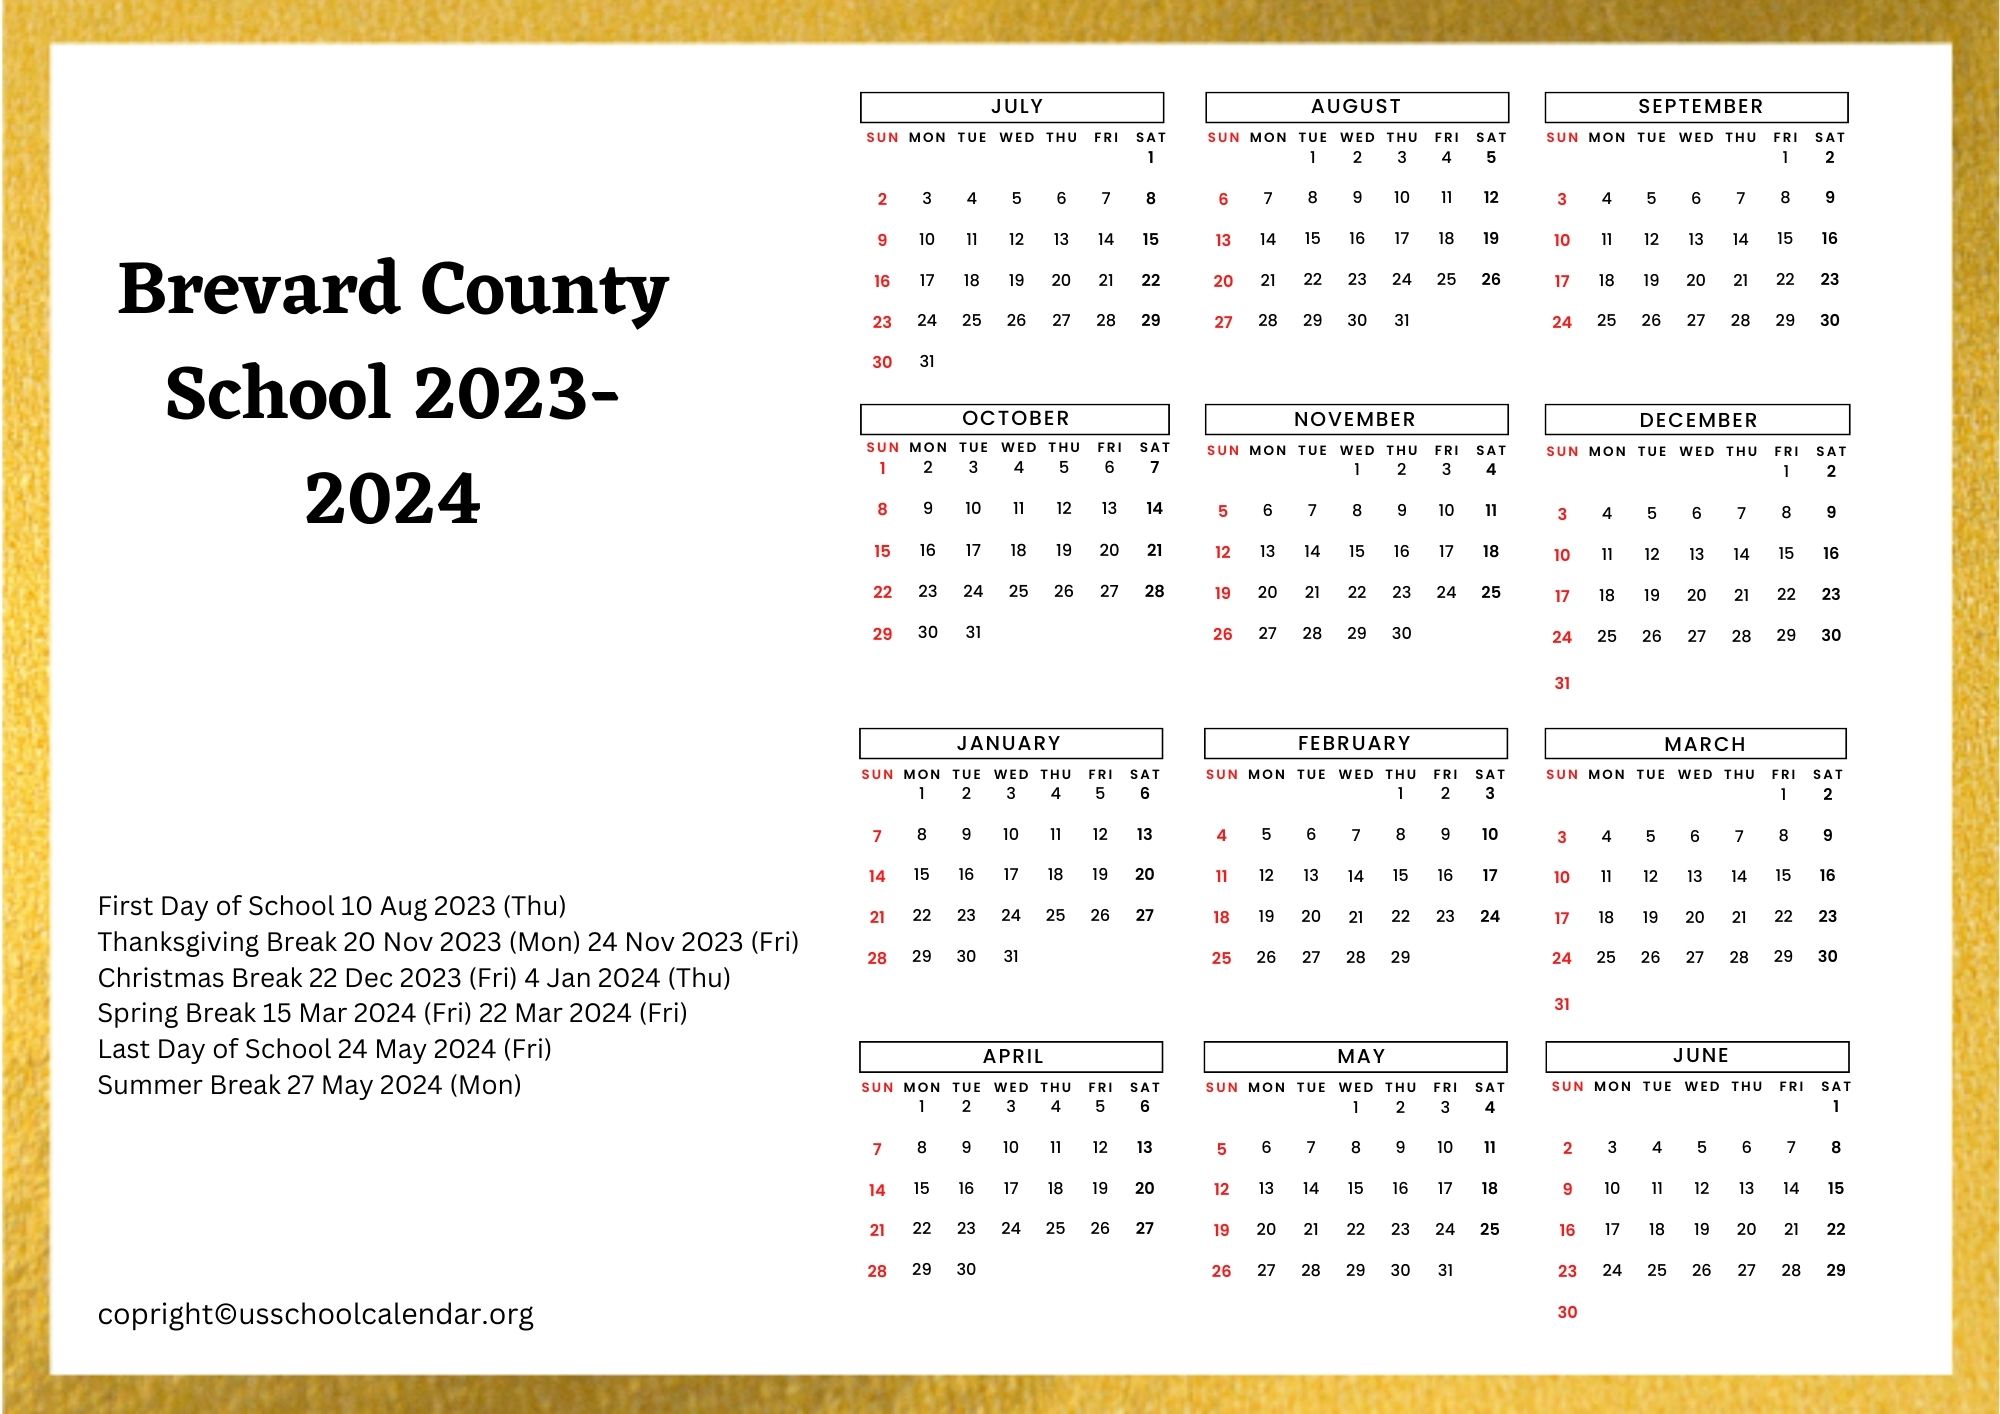 Brevard County School Calendar with Holidays 20232024